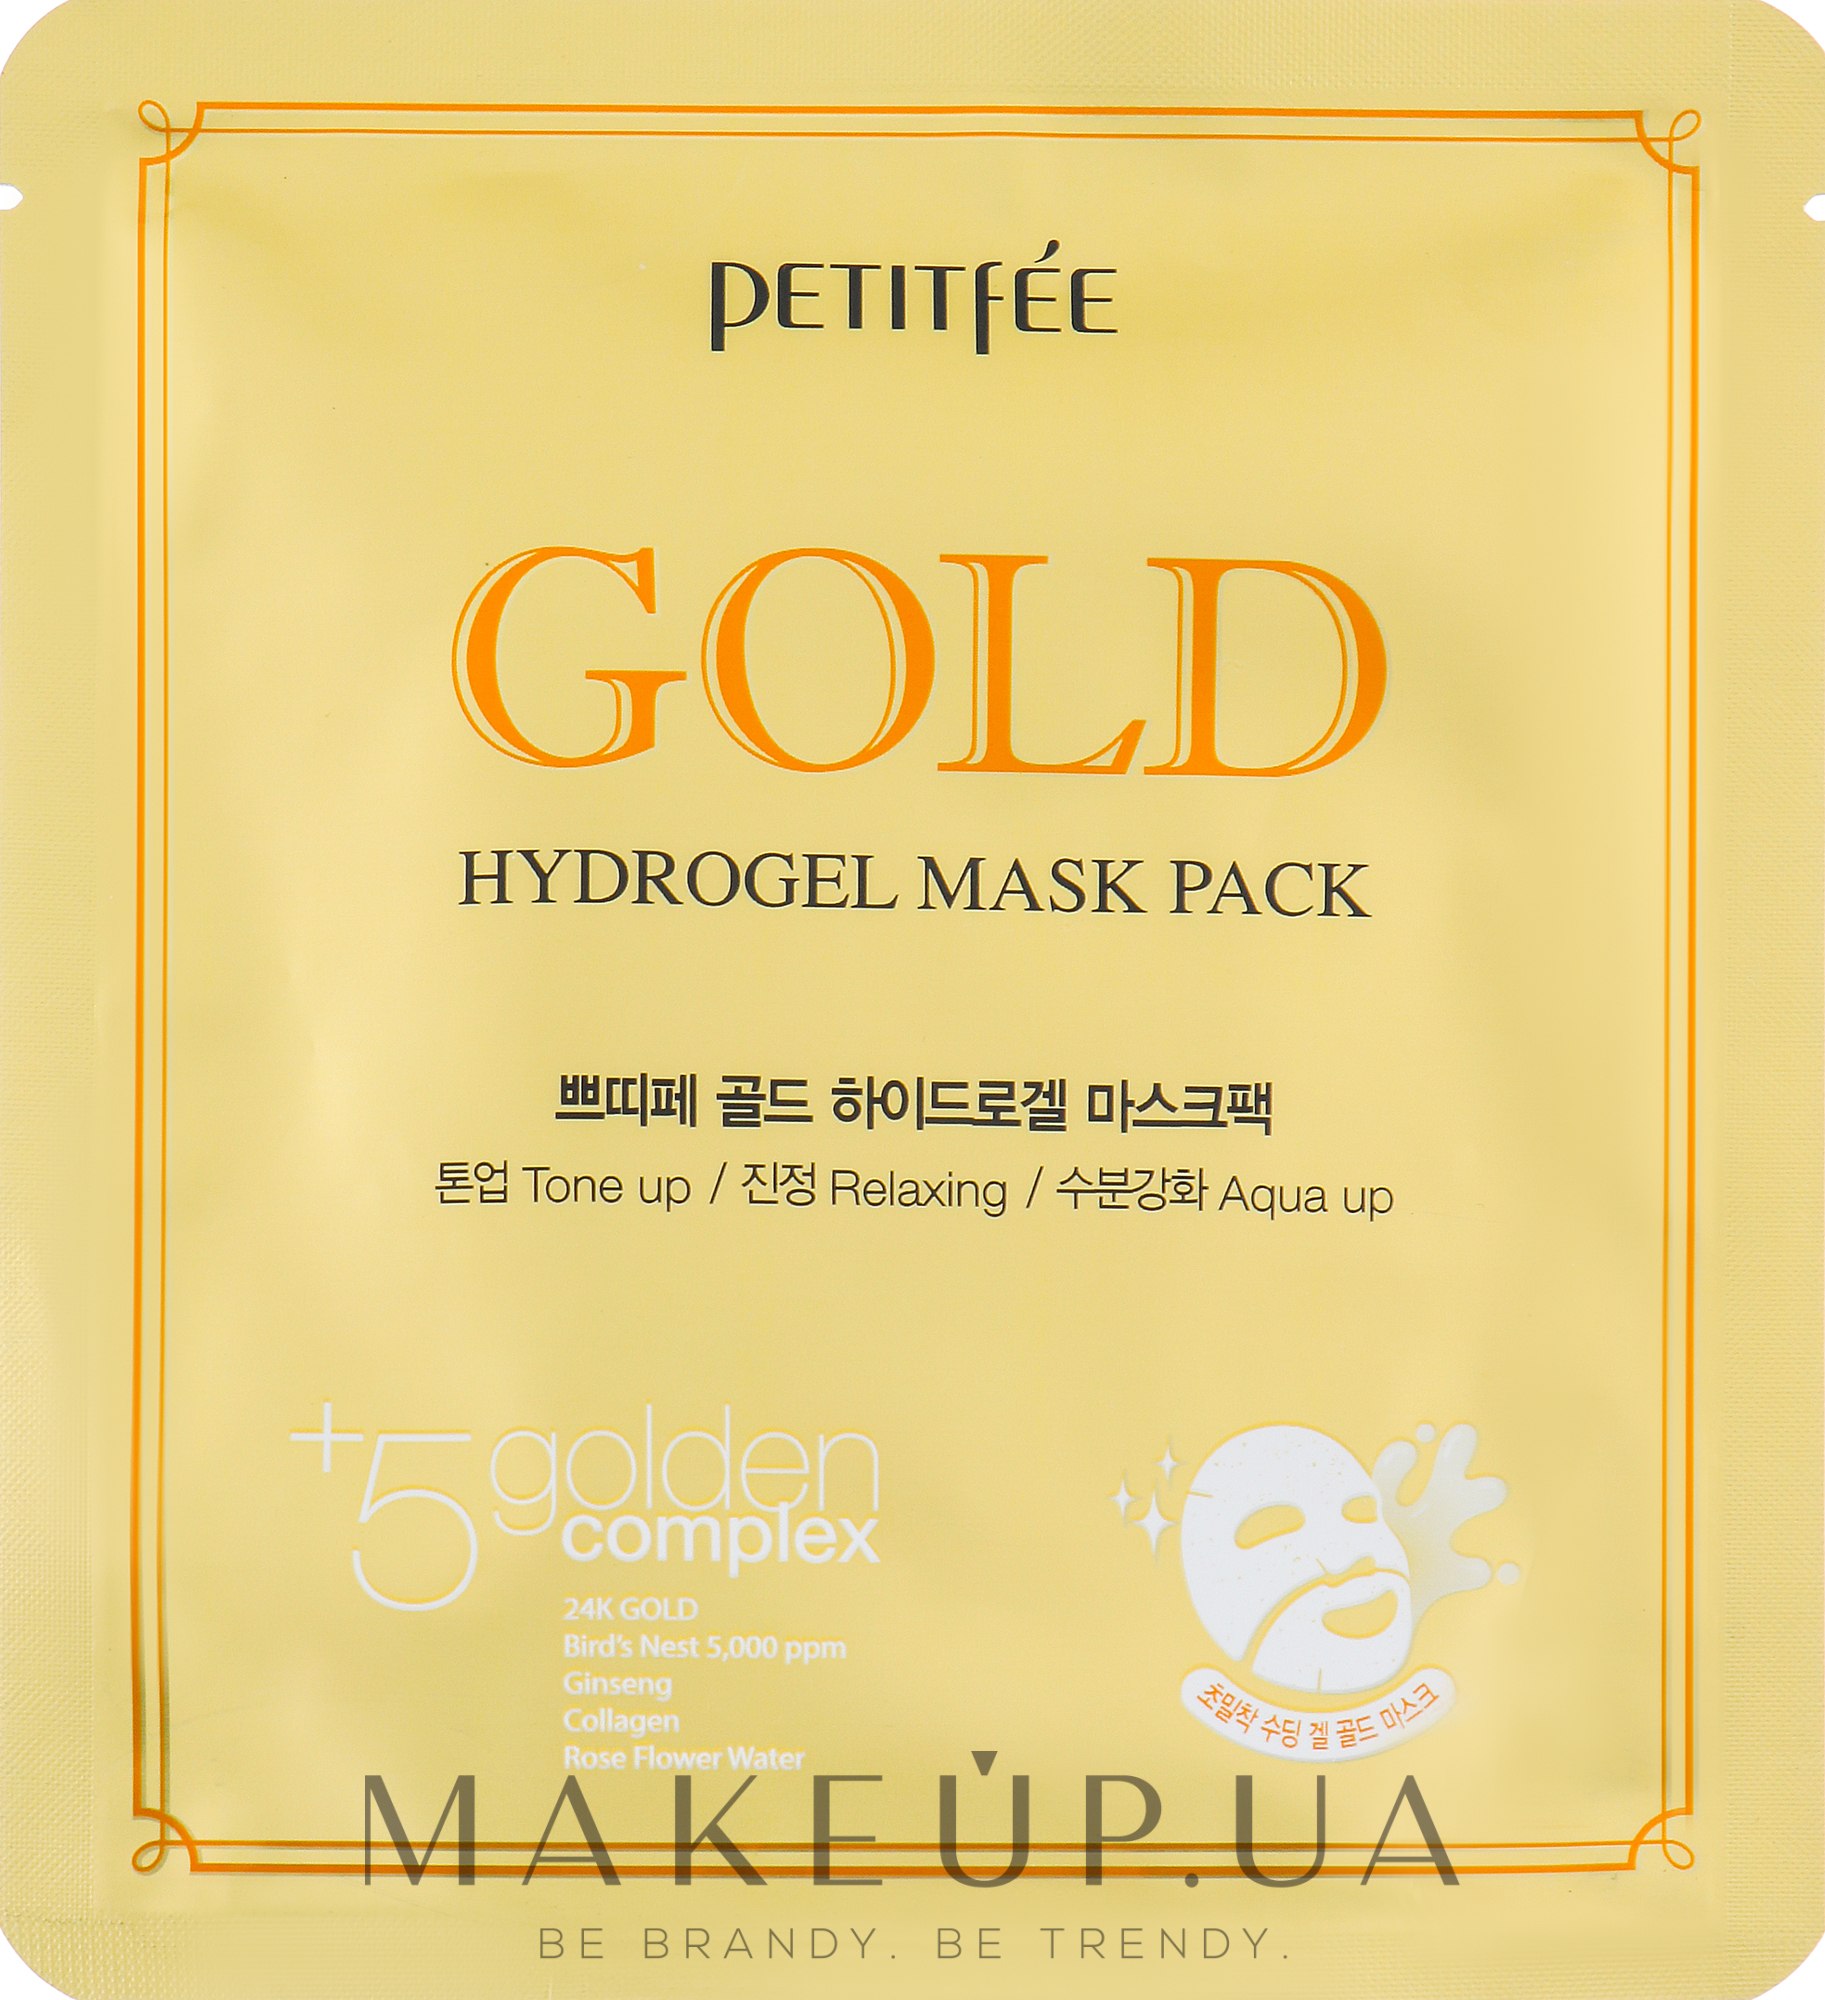 Гідрогелева маска для обличчя з золотим комплексом +5 - Petitfee Gold Hydrogel Mask Pack +5 golden complex — фото 1шт